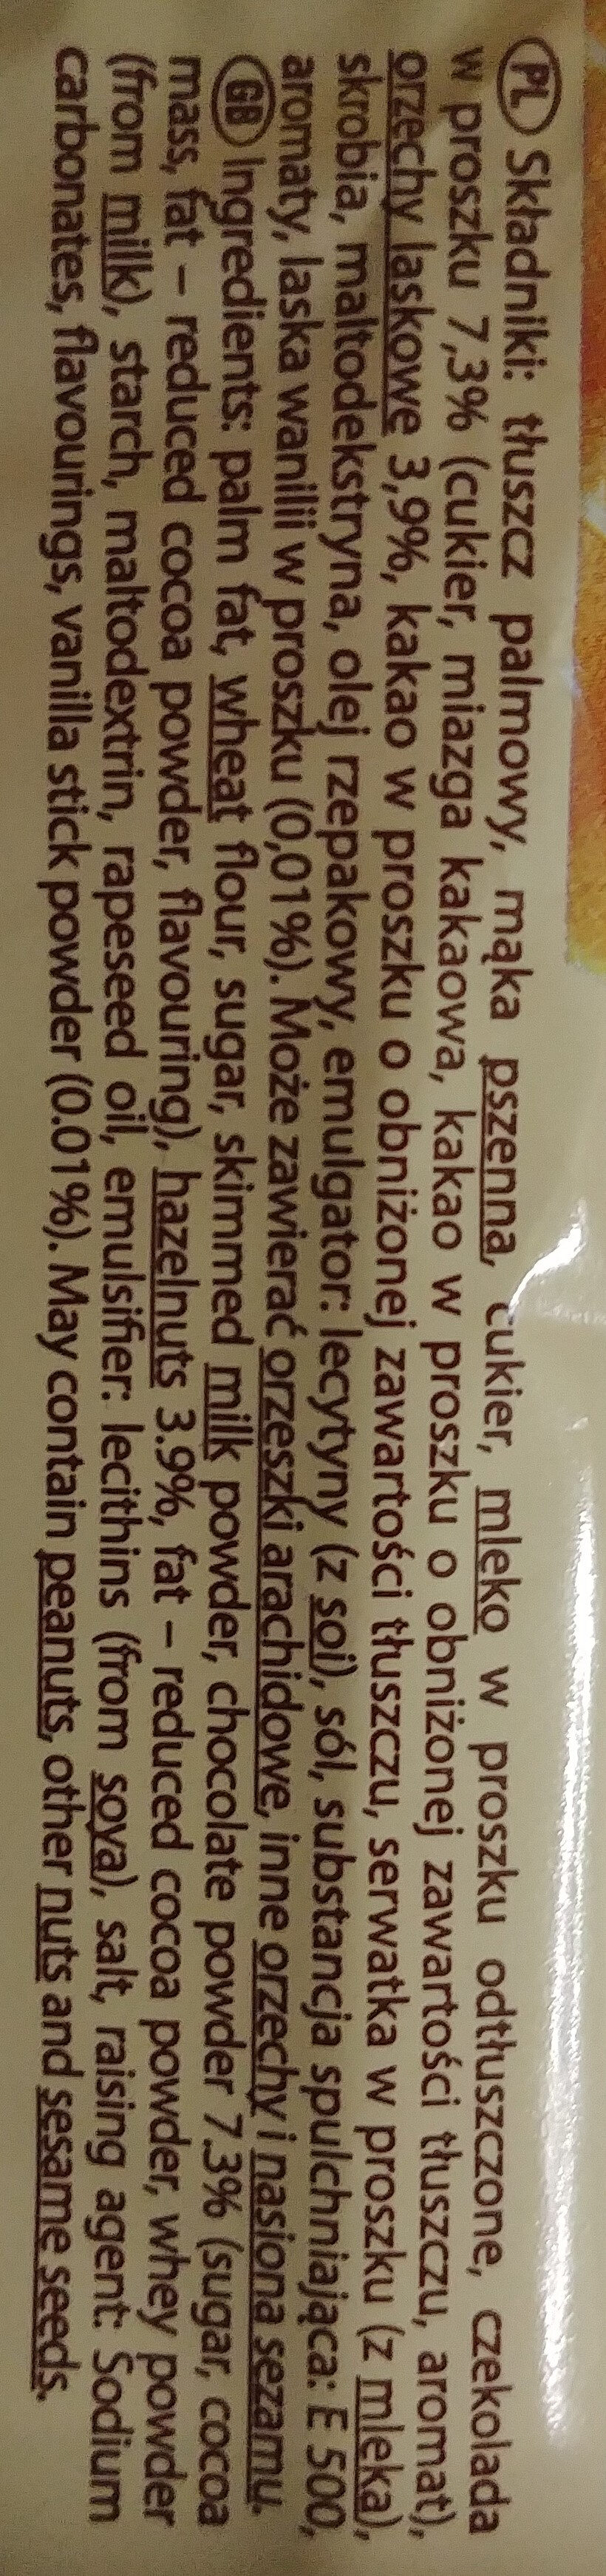 Grzeski gofre - Ingredients - pl